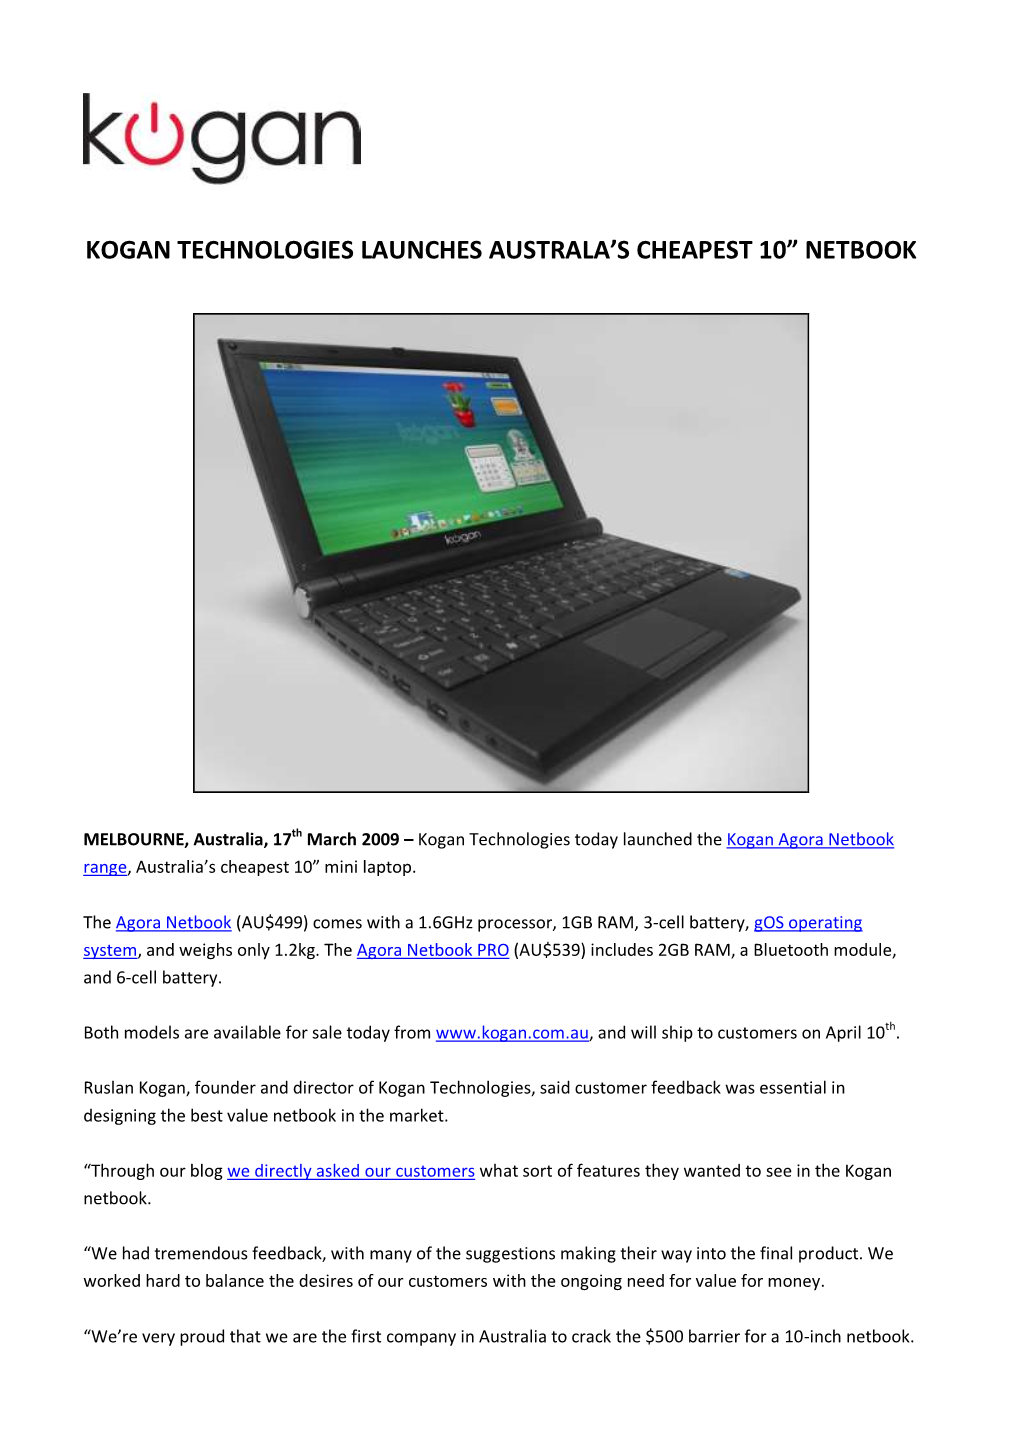 Kogan Technologies Launches Australa's